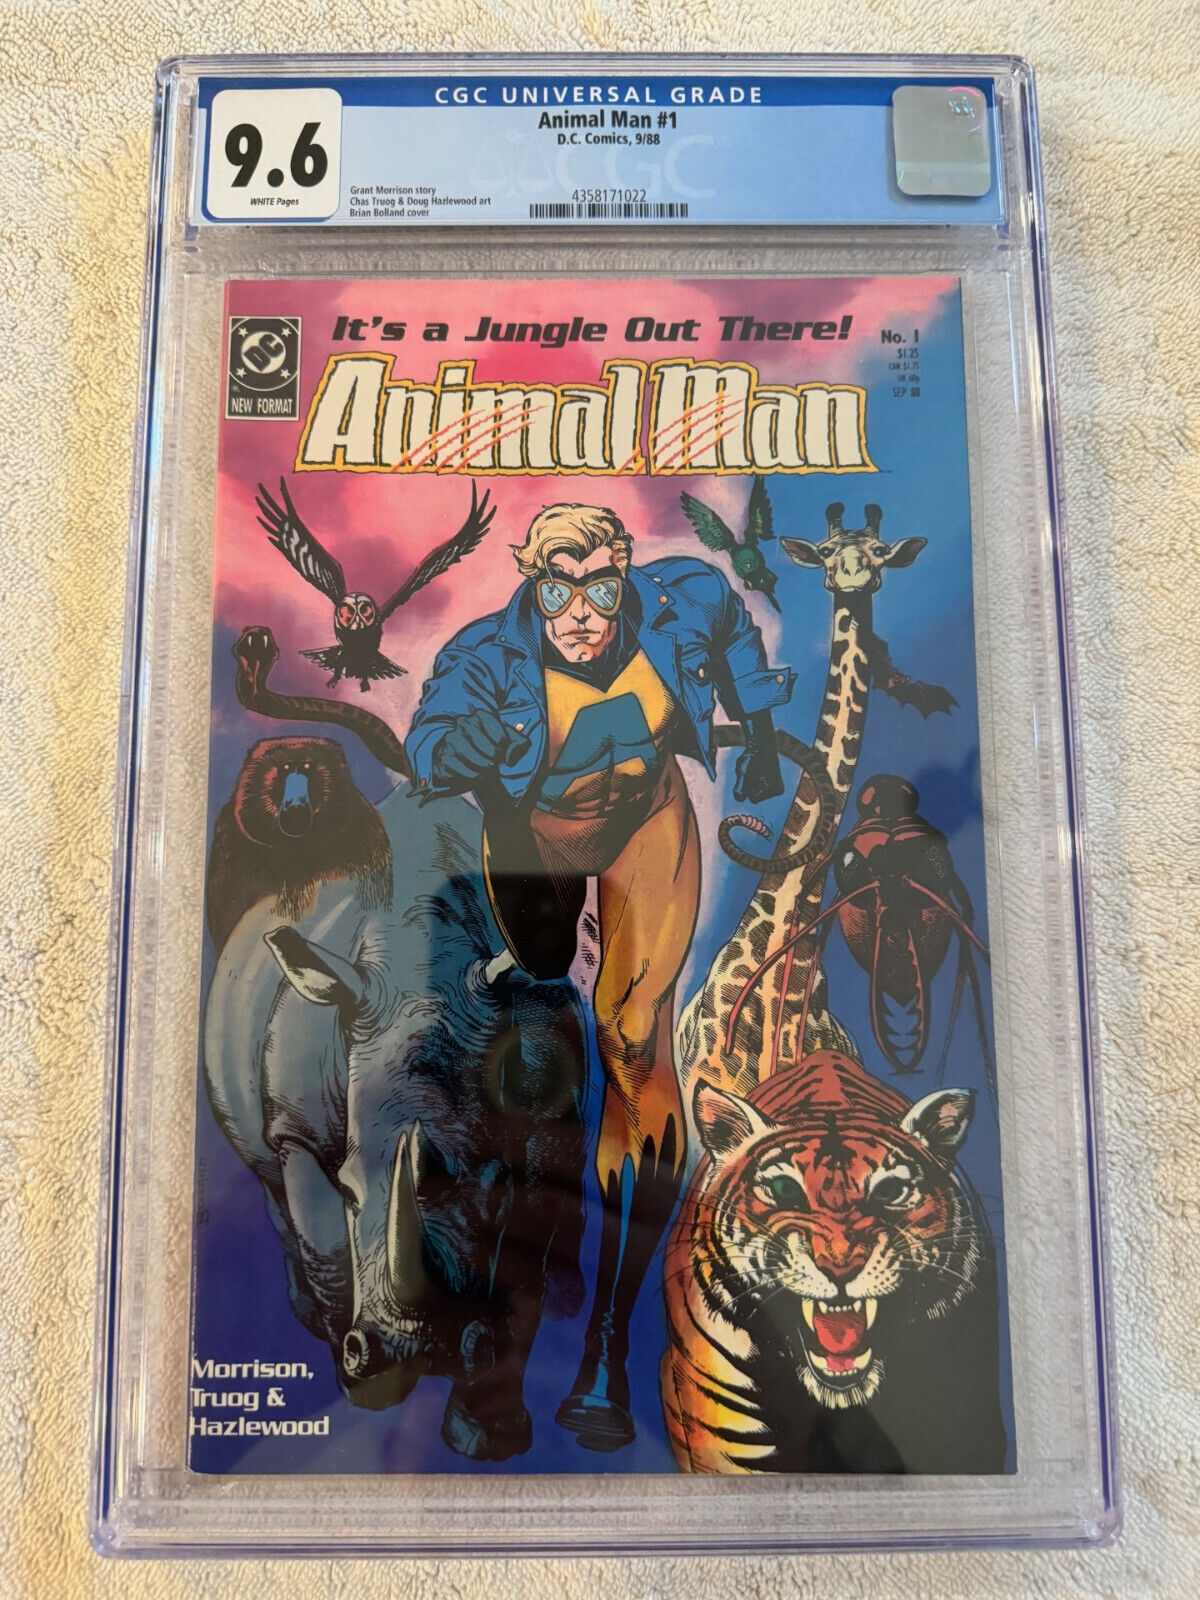 Animal Man #1 - CGC 9.6 - White Pages - DC Comics 1988